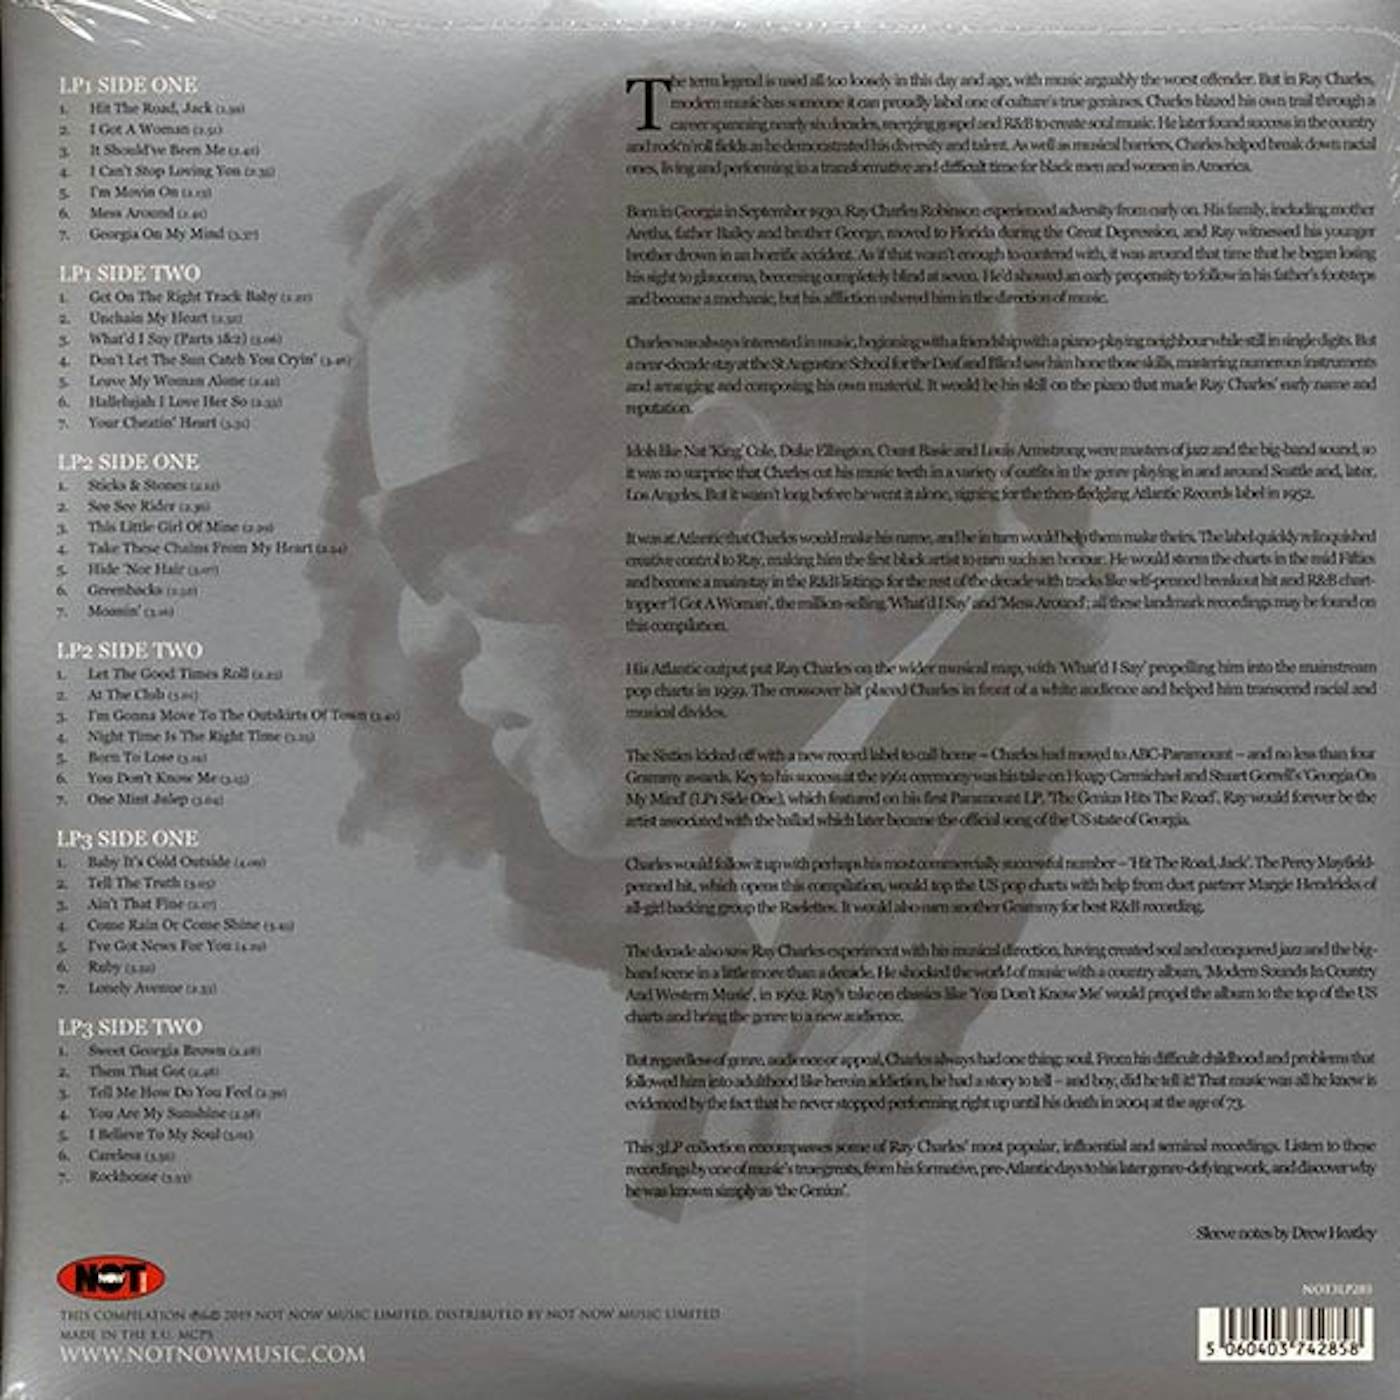 Ray Charles  LP Vinyl Record -  The Platinum Collection (42 tracks) (3xLP Vinyl Record) (colored vinyl)